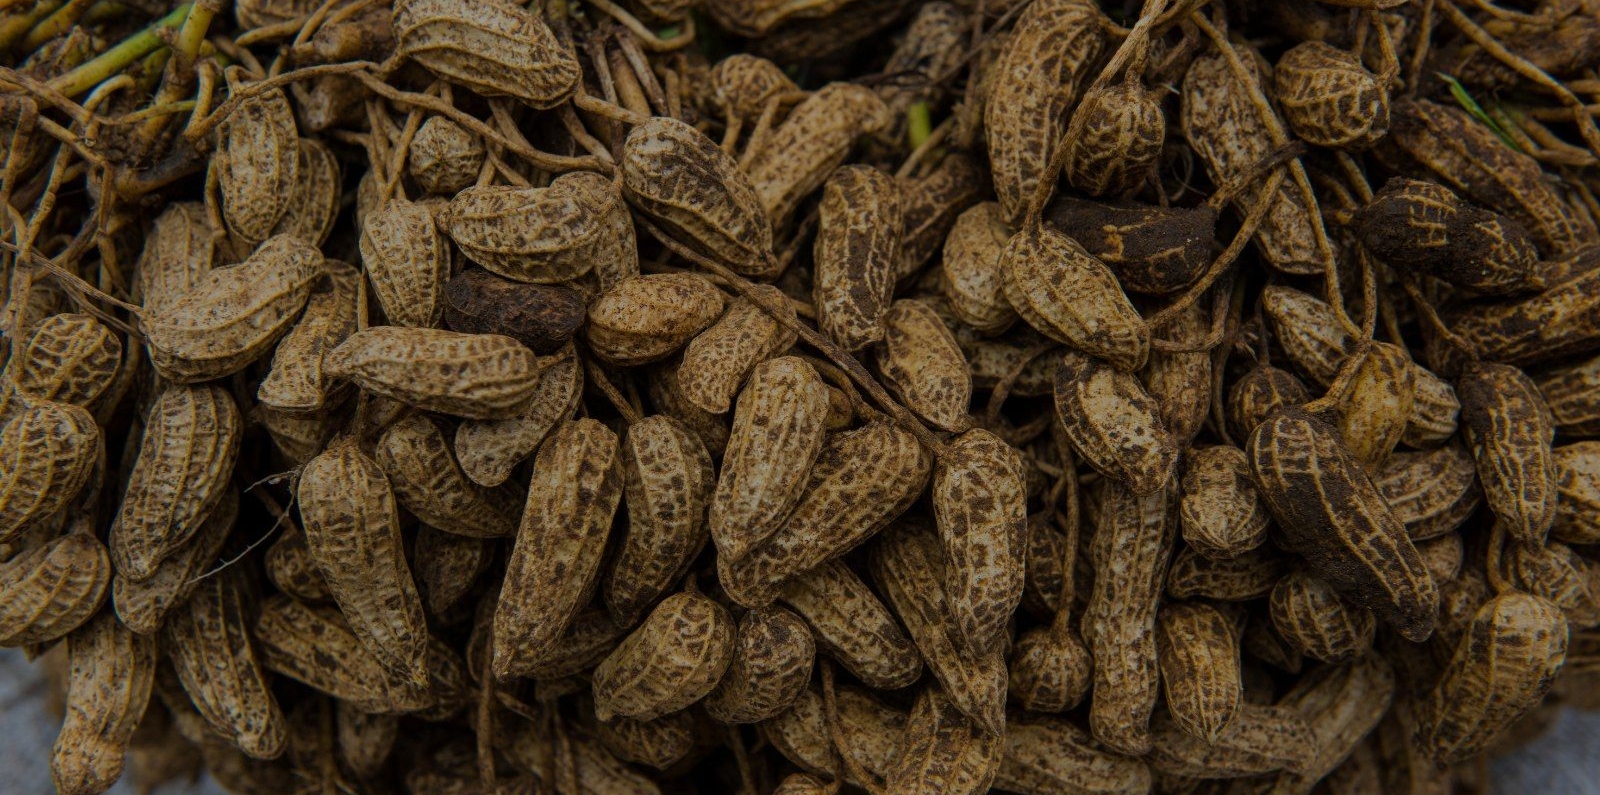 Freshly harvested peanuts (ground nuts)